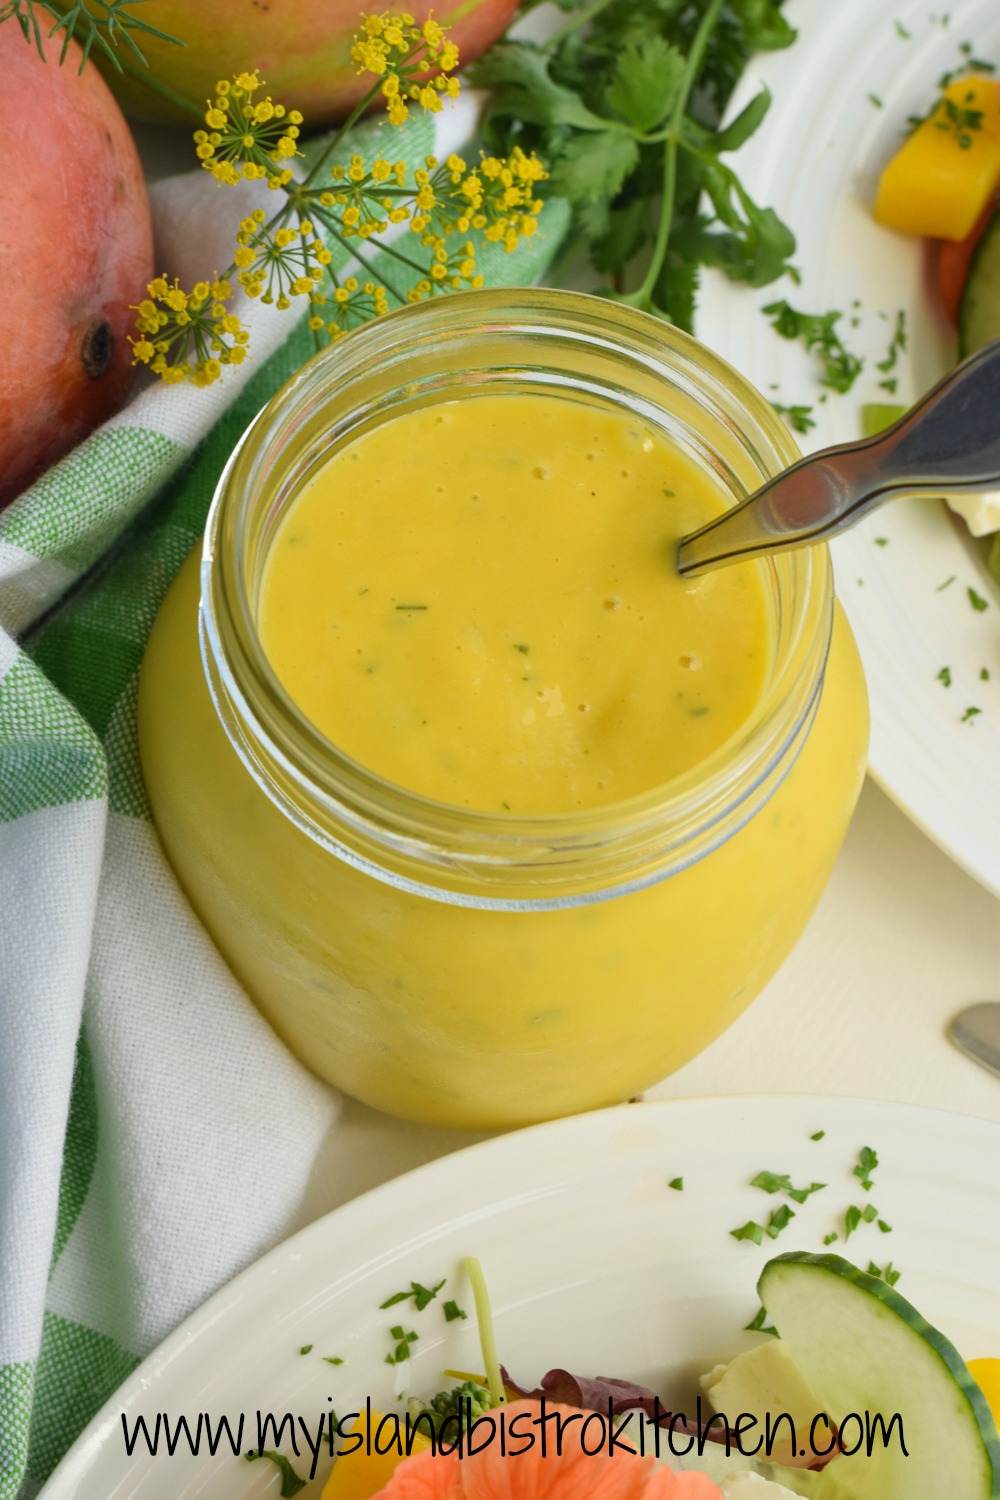 Mango Salad Dressing Recipe - My Island Bistro Kitchen